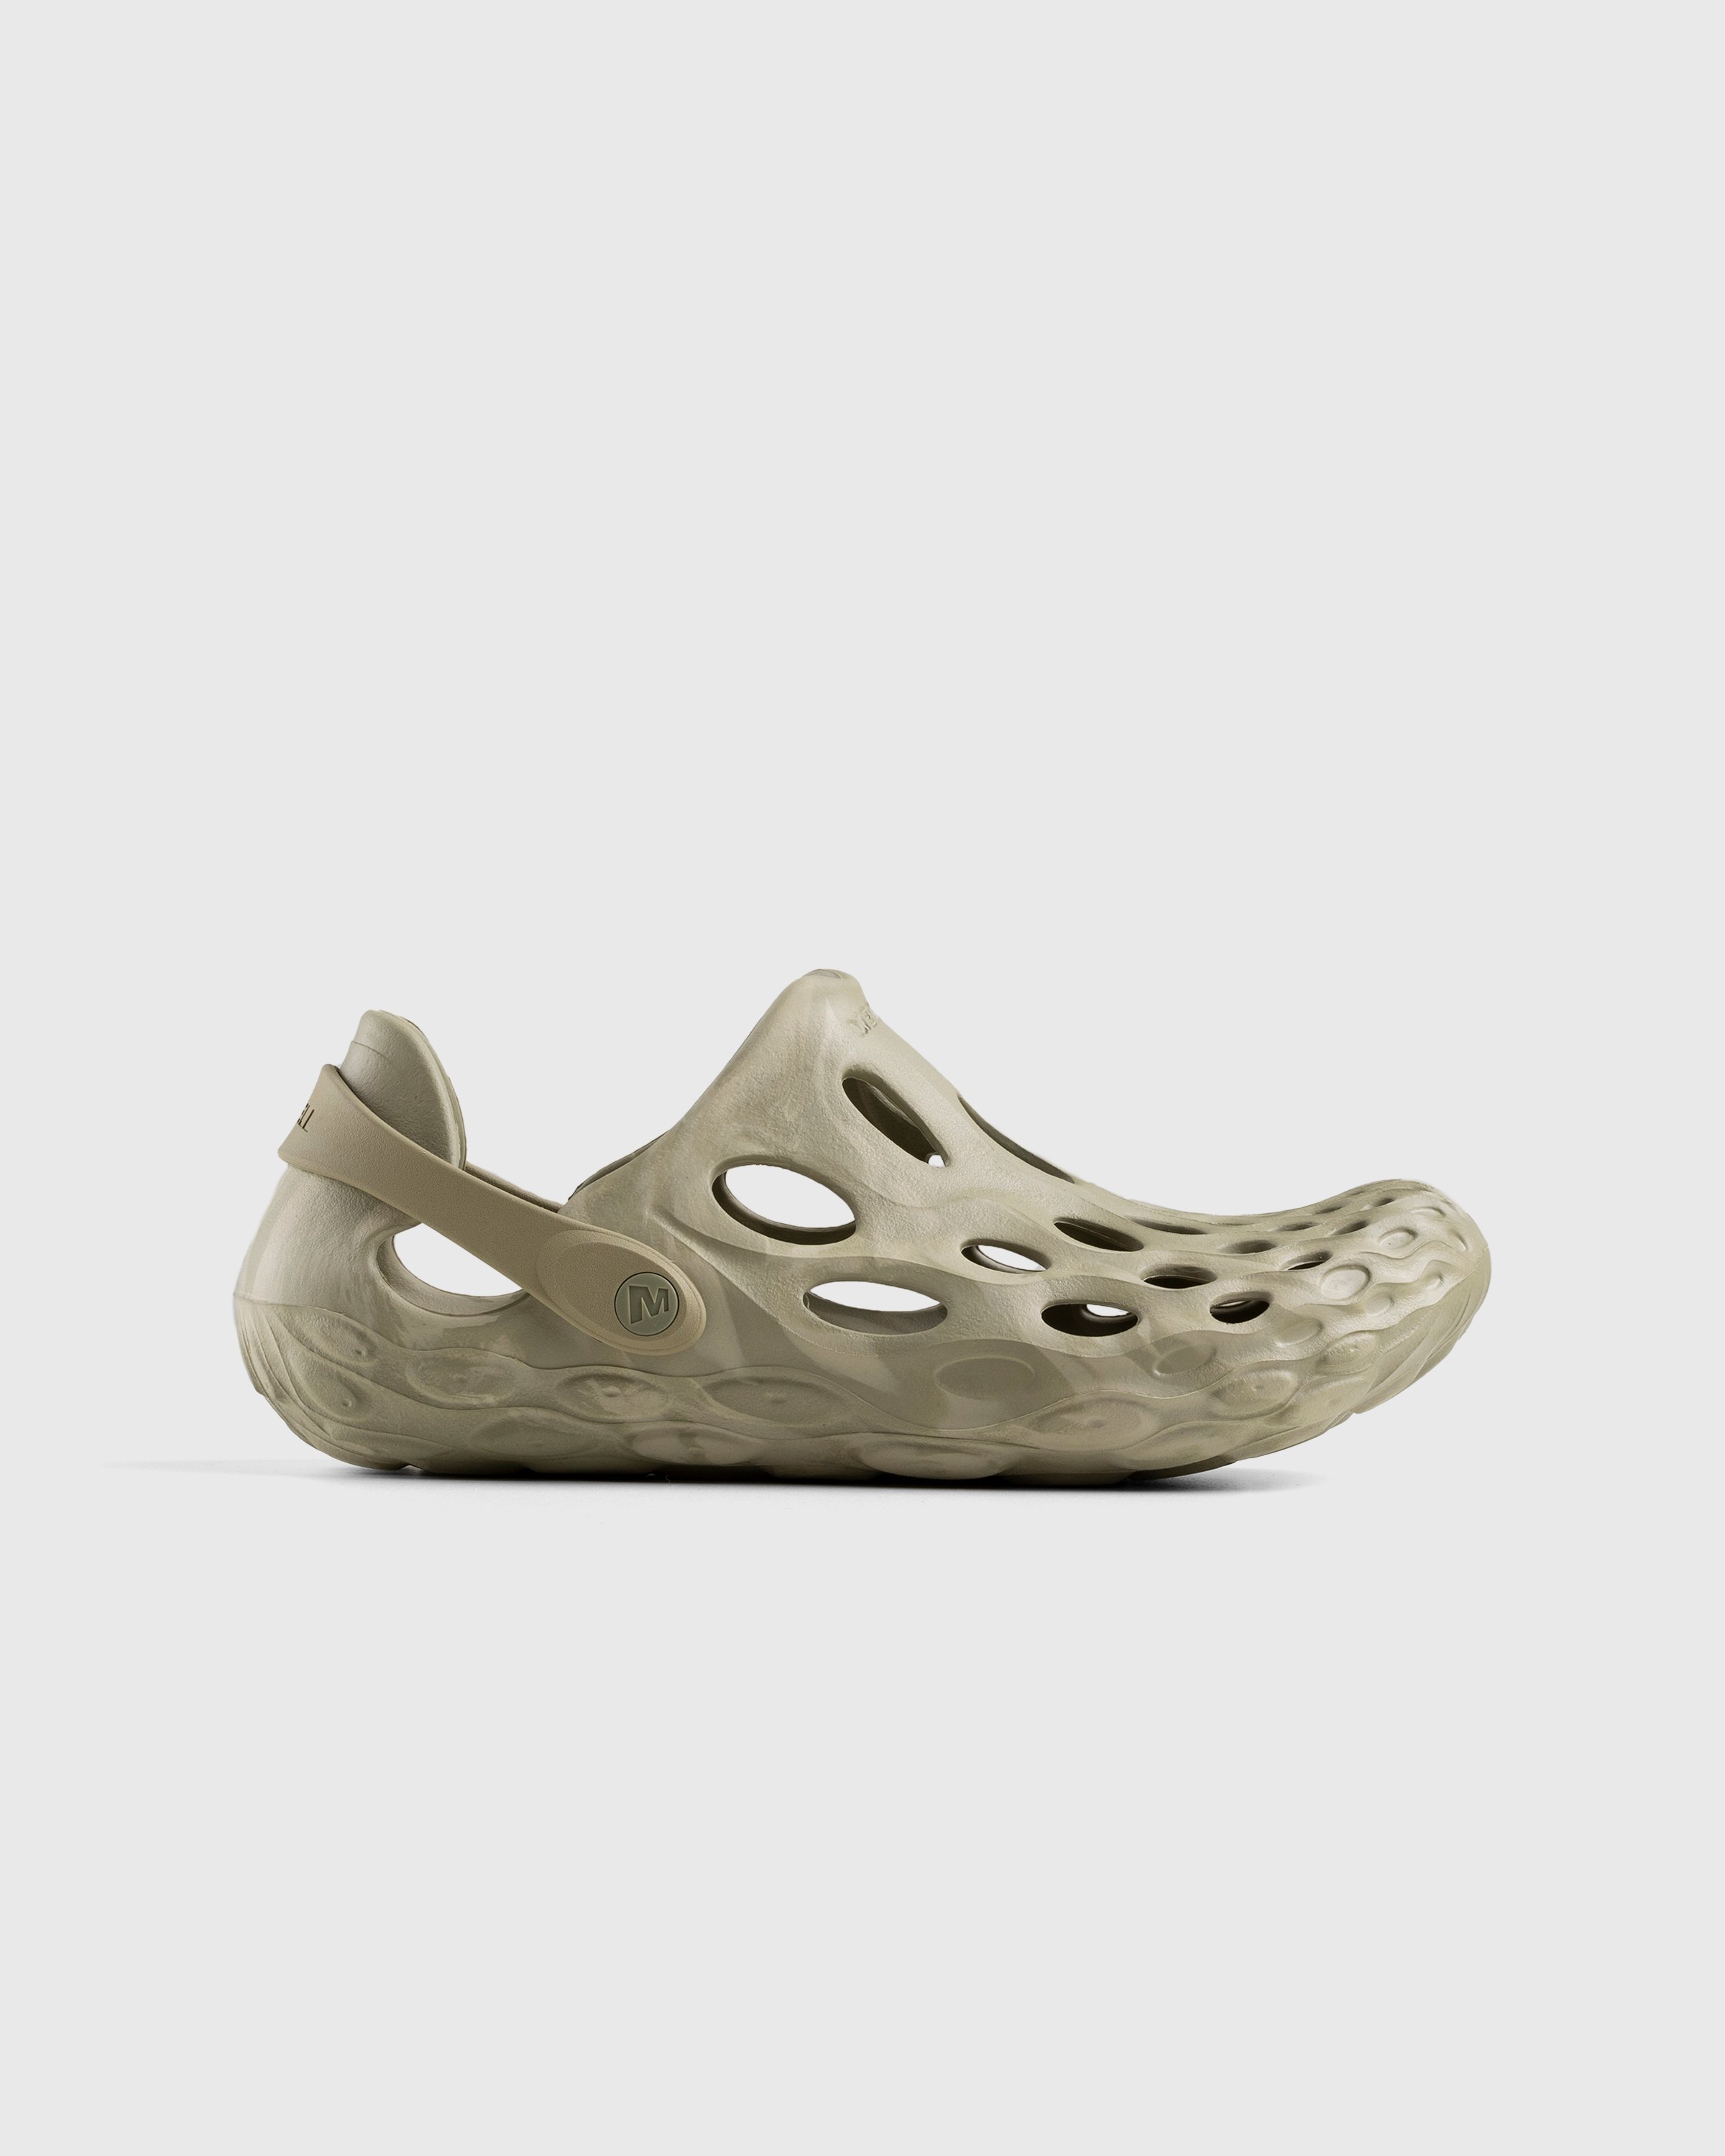 Merrell - Hydro Moc Herb - Footwear - Green - Image 1